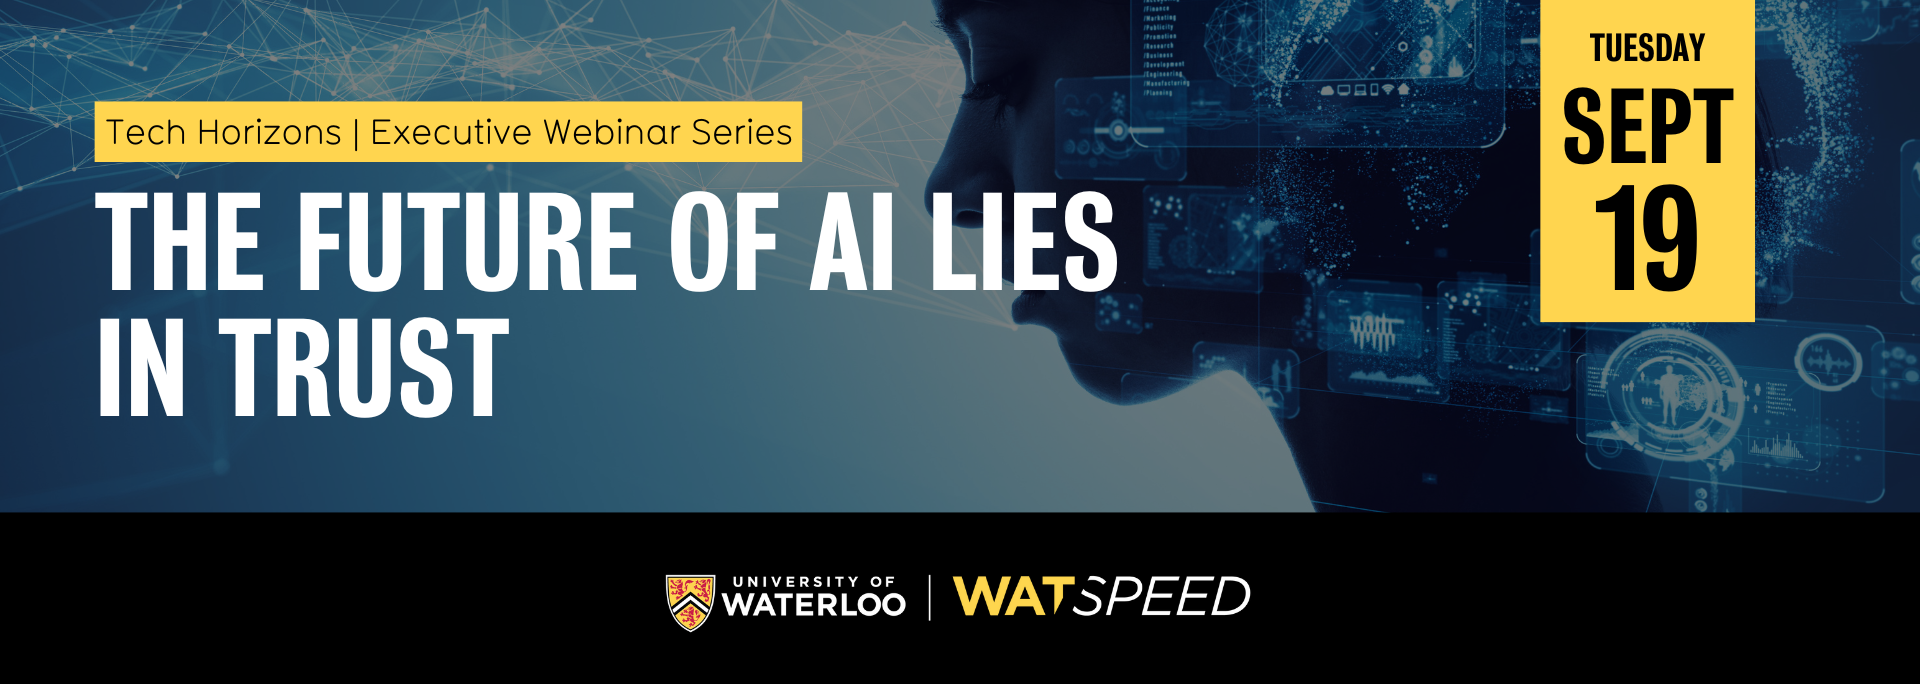 Tech Horizons | Executive Webinar Series - The Future of AI Lies in Trust